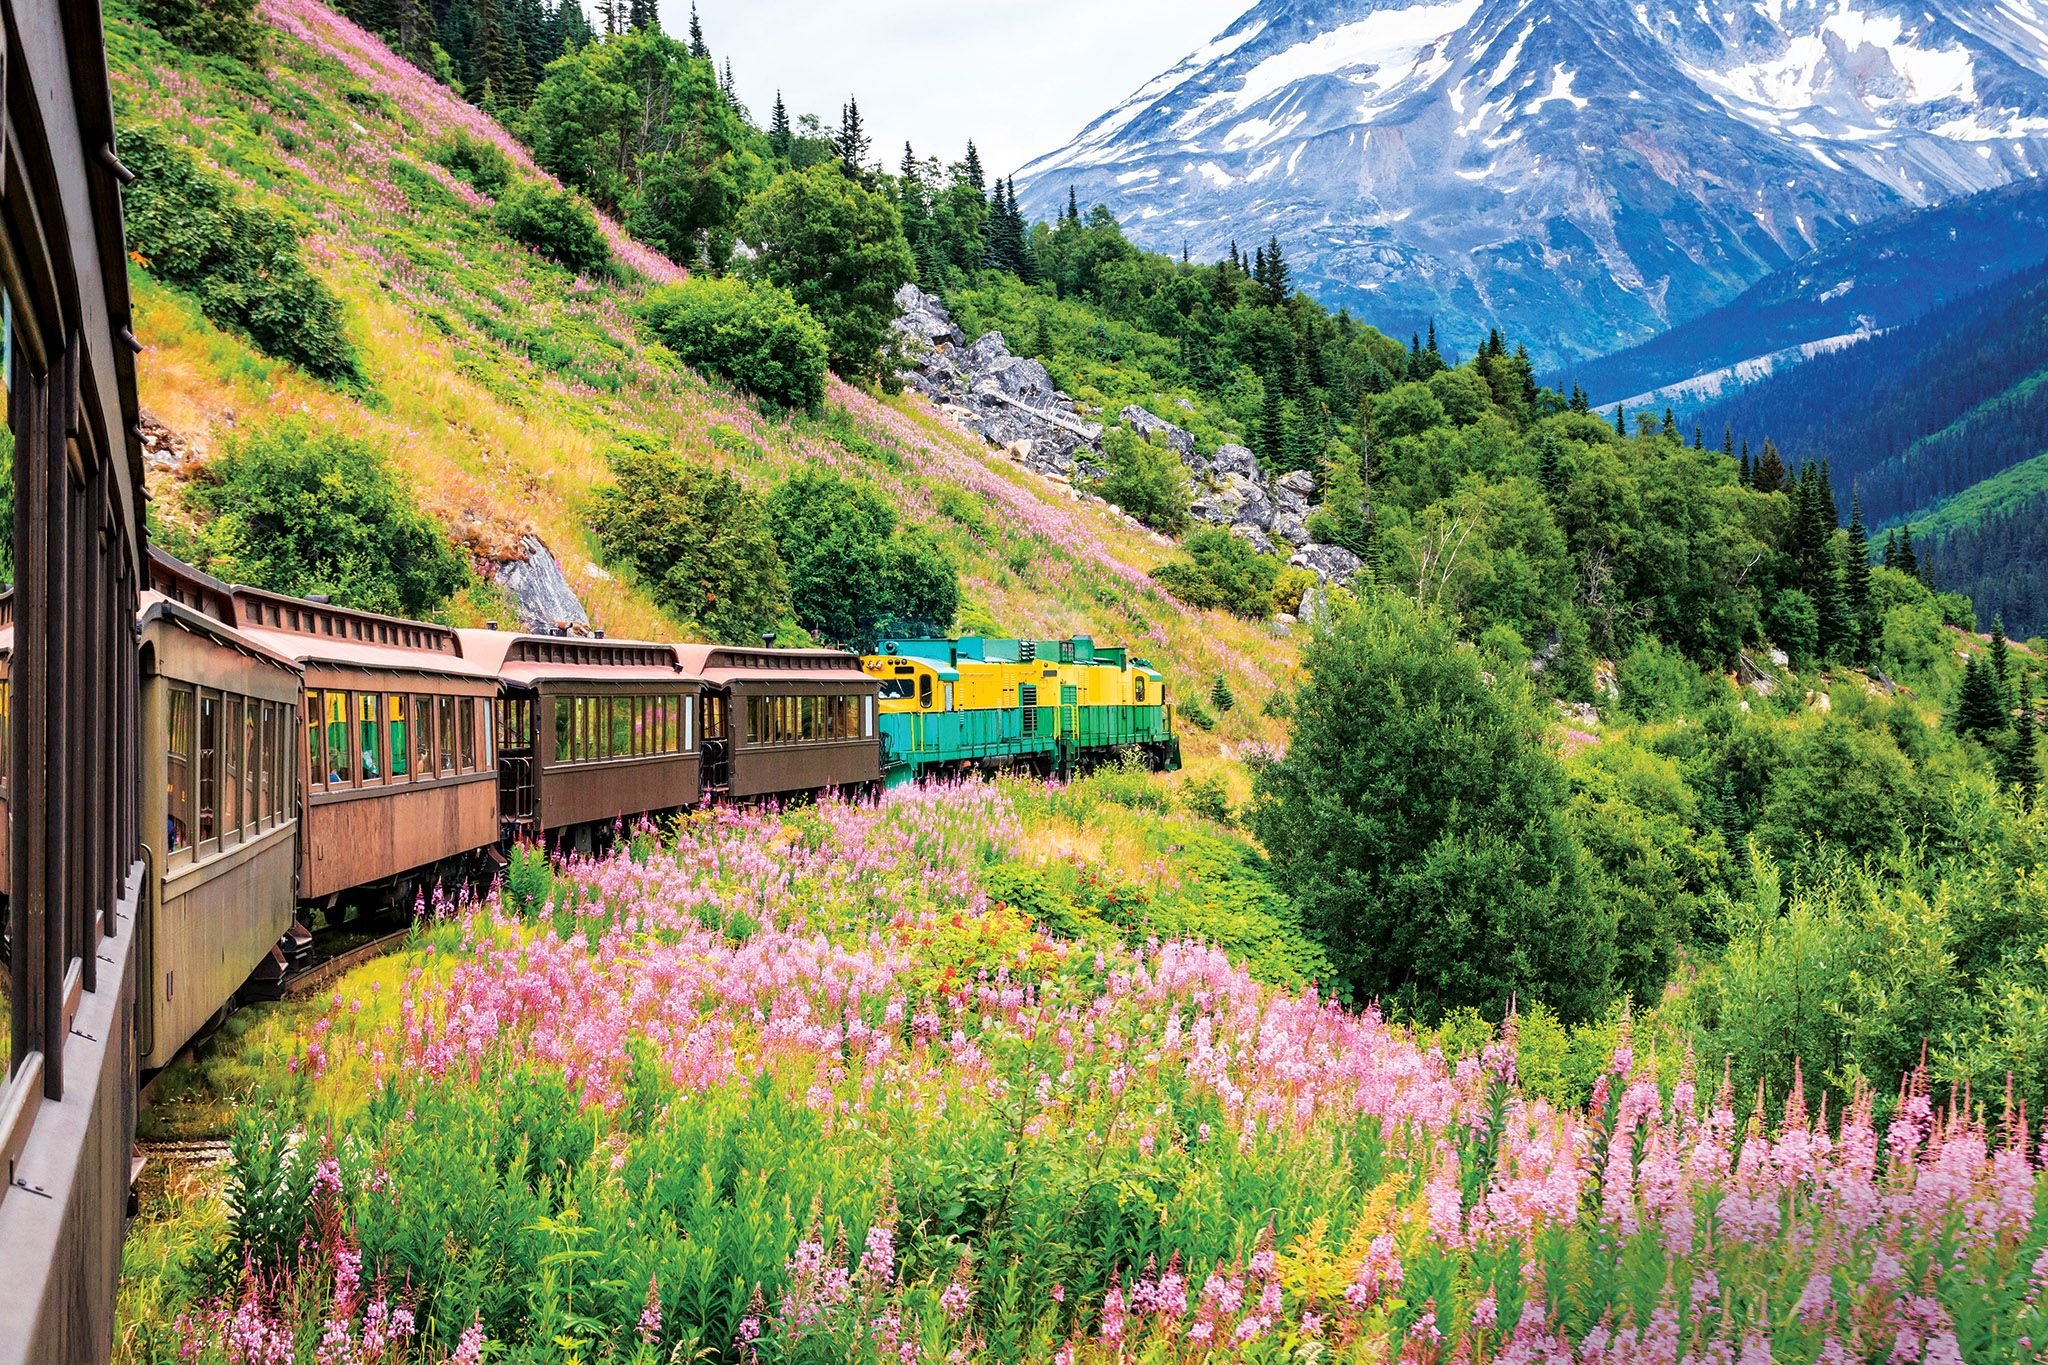 Holland-America-Alaska-Cruisetour-Train.jpeg